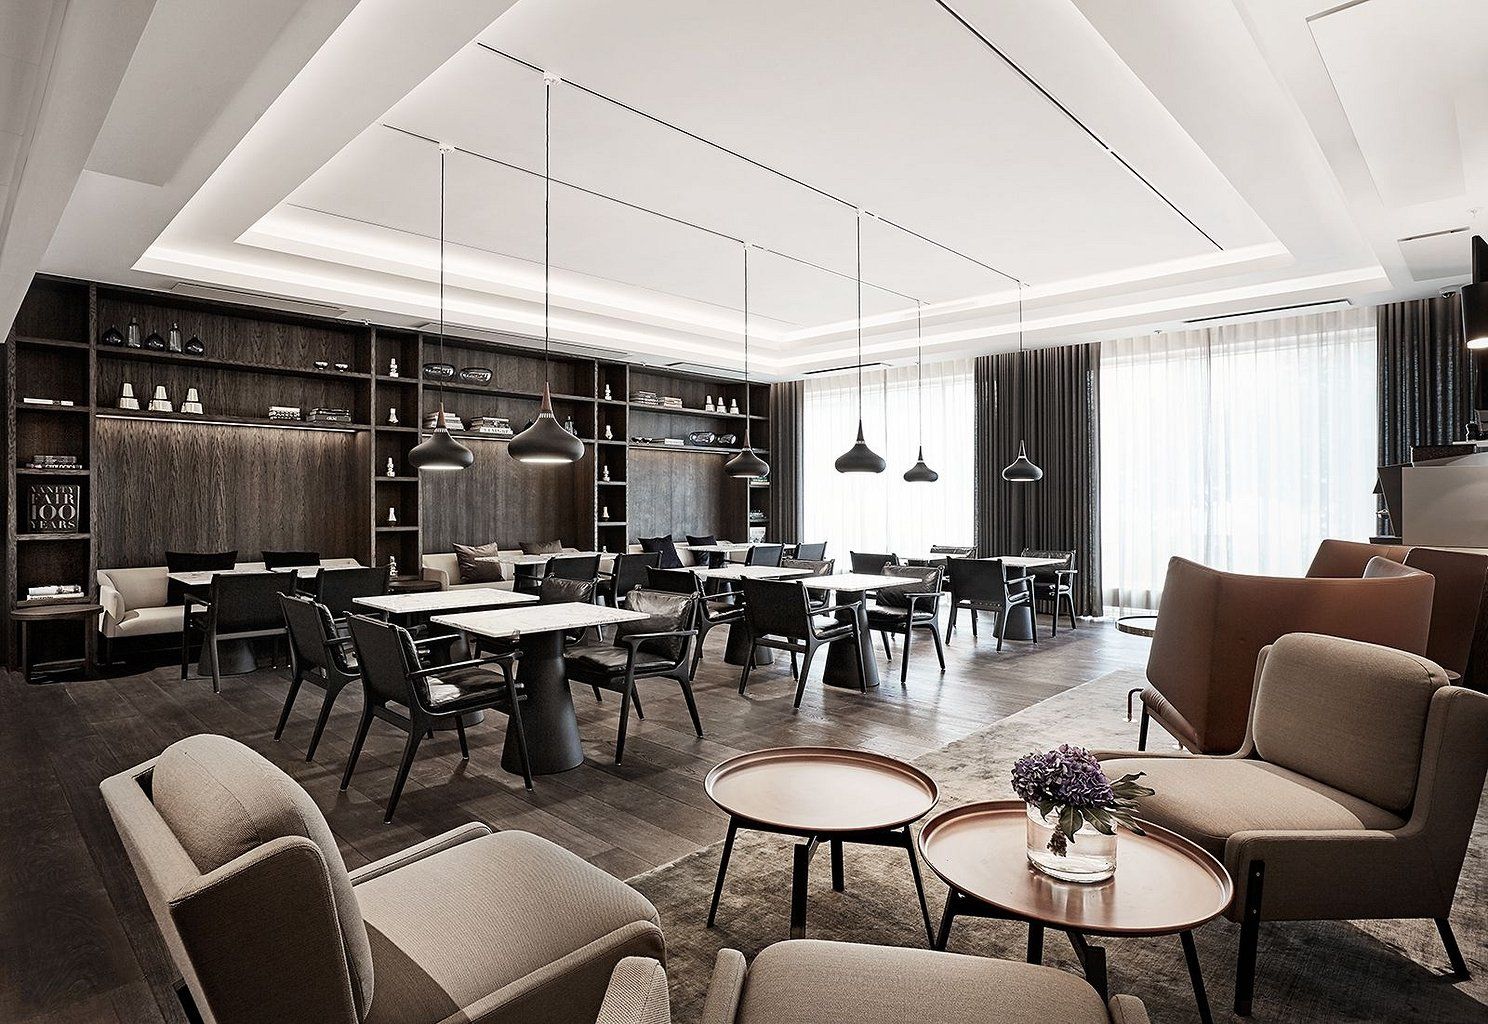 Restaurant lounge furniture design